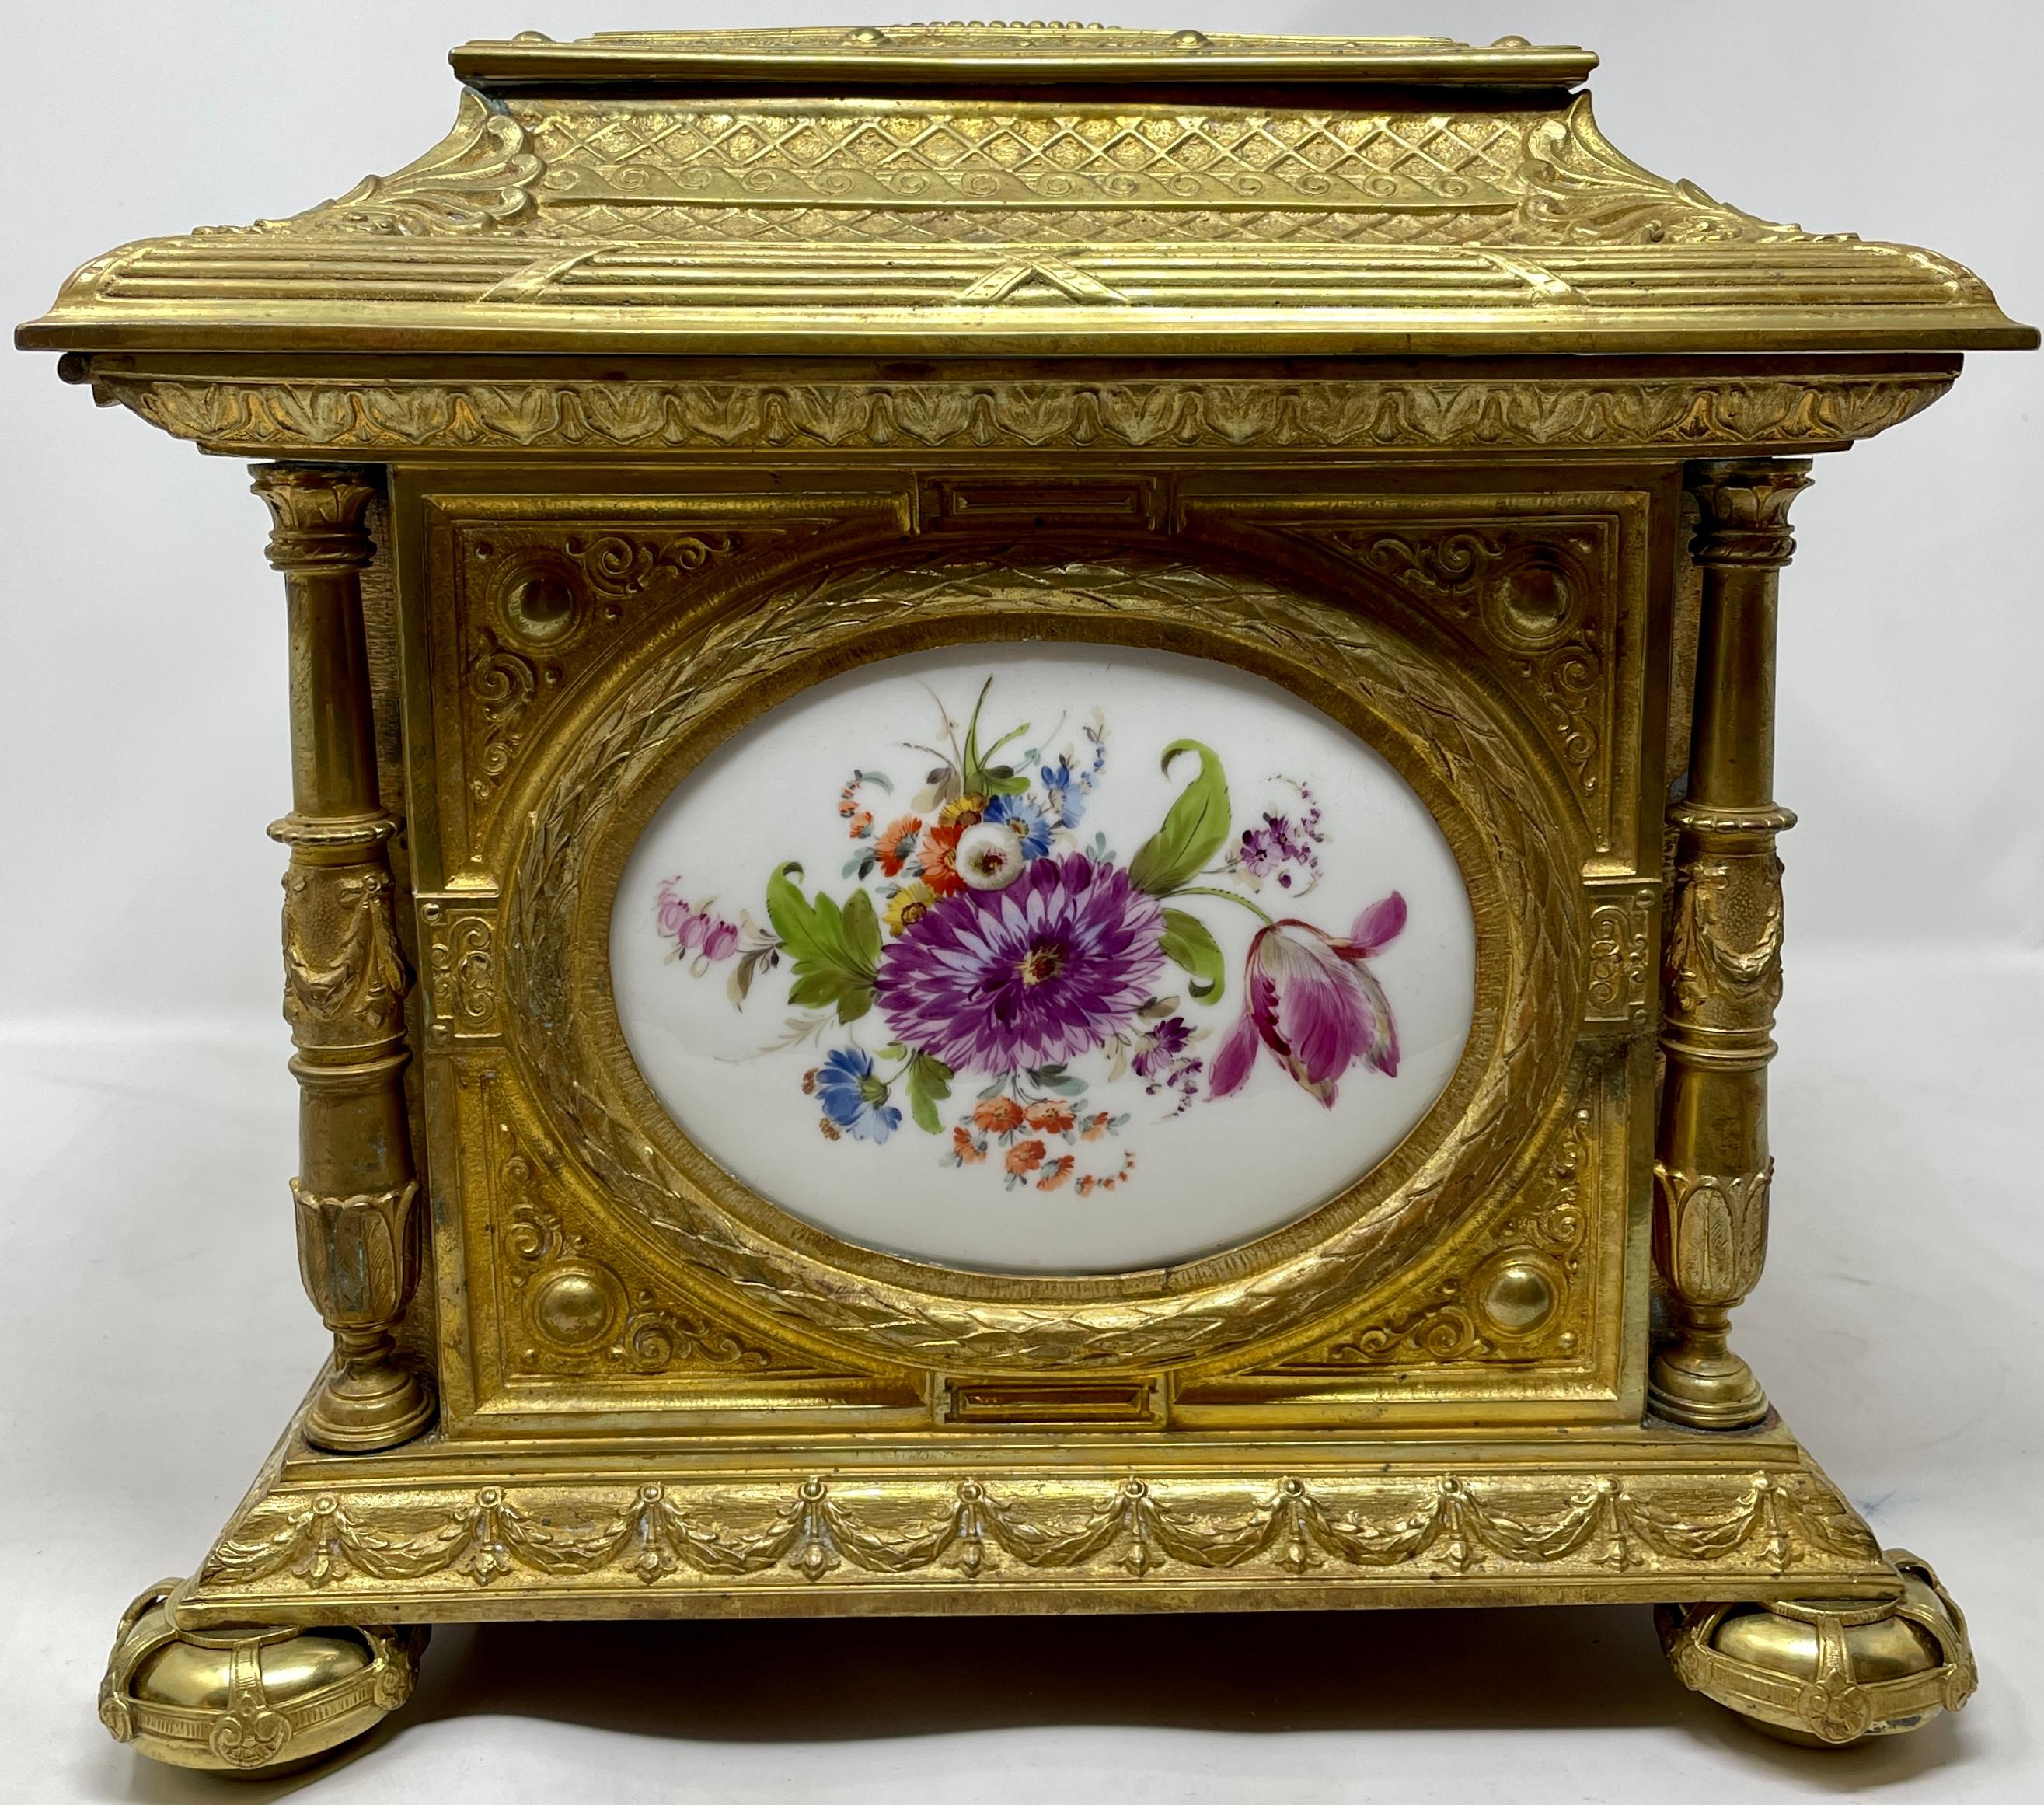 Antique German Porcelain and Ormolu Jewel Box, Circa 1875-1885. 1